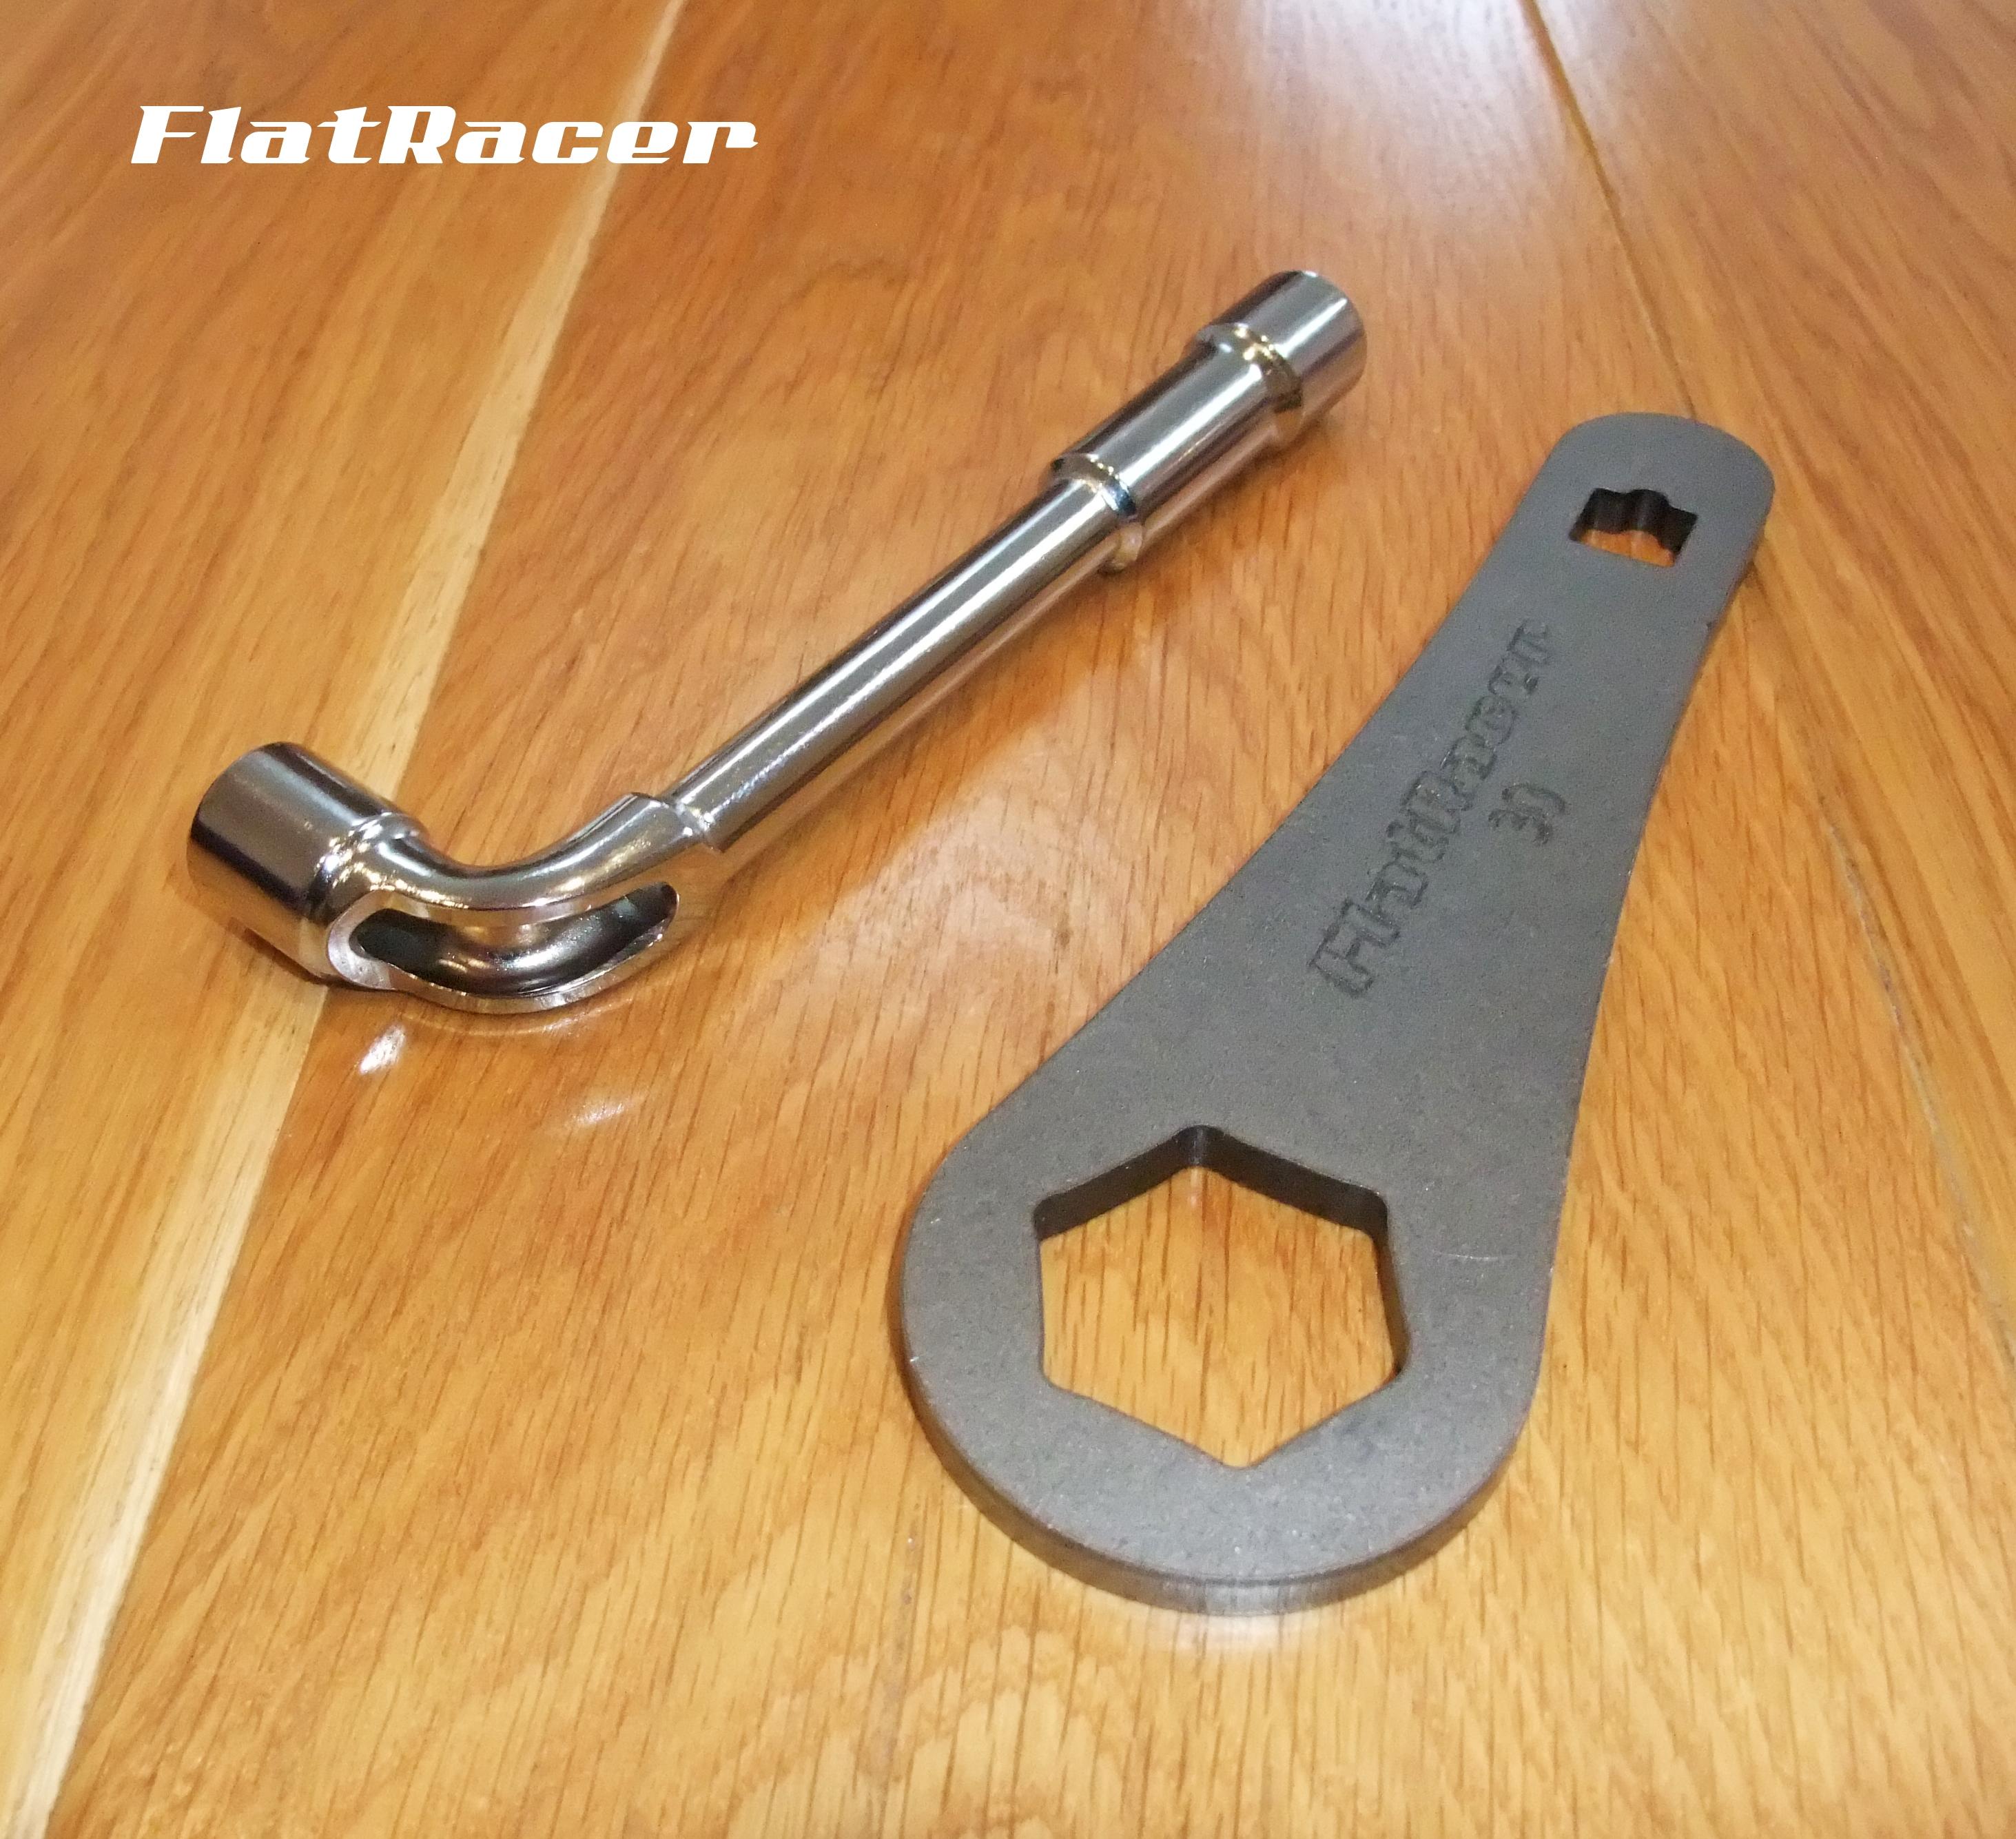 FlatRacer BMW Airhead Boxer 30mm spanner tool set - BMW /5 fork bottom nuts